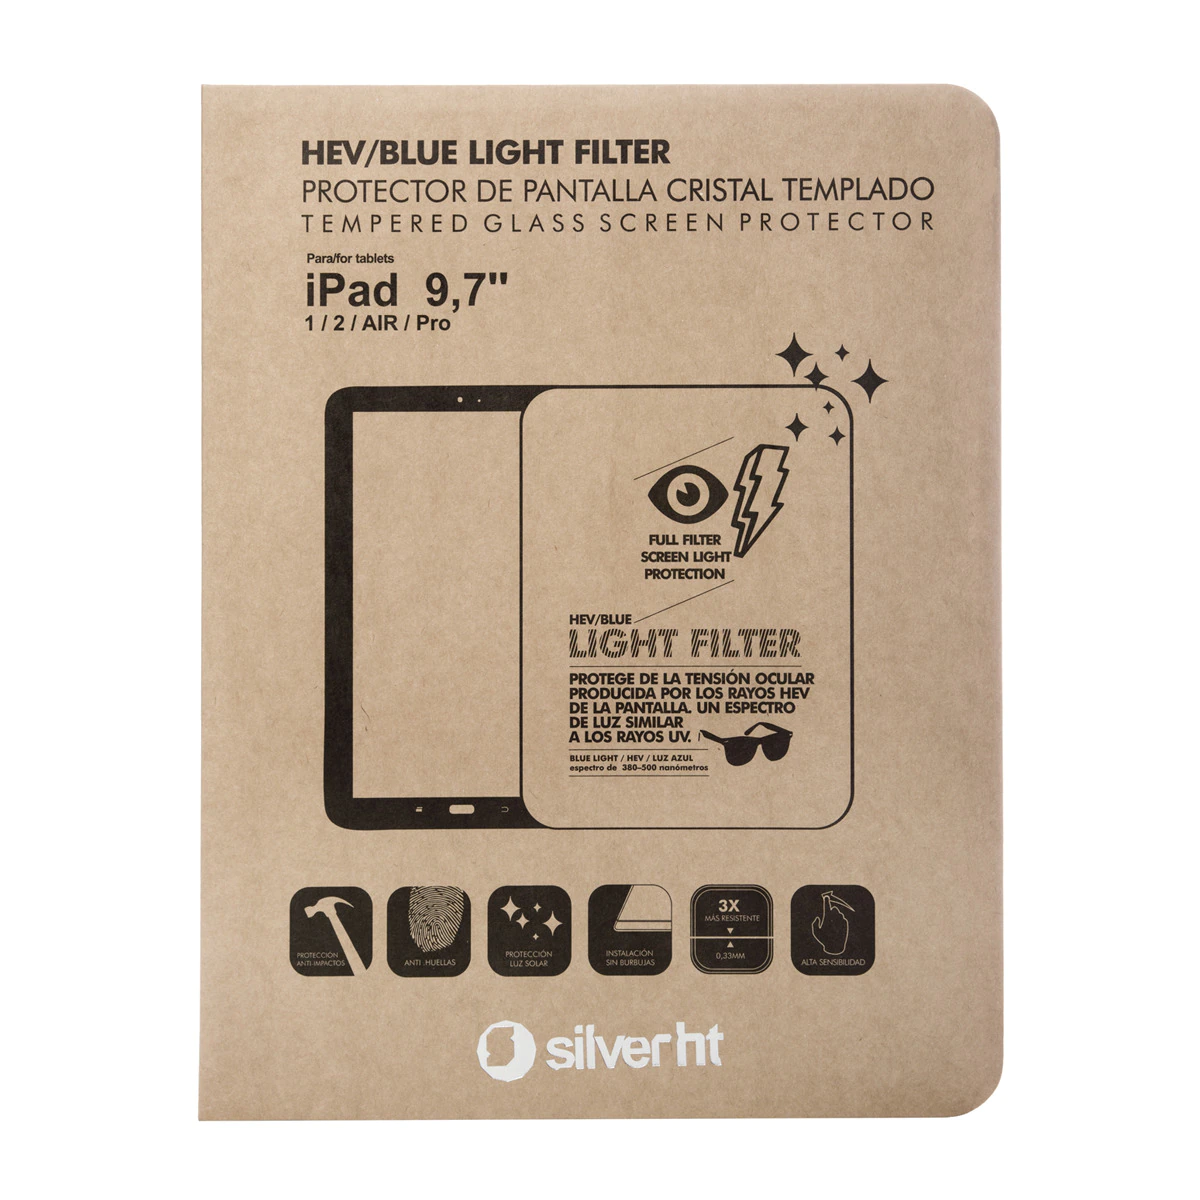 Protector de pantalla de cristal templado SilverHT para iPad 24,64 cm (9,7″)